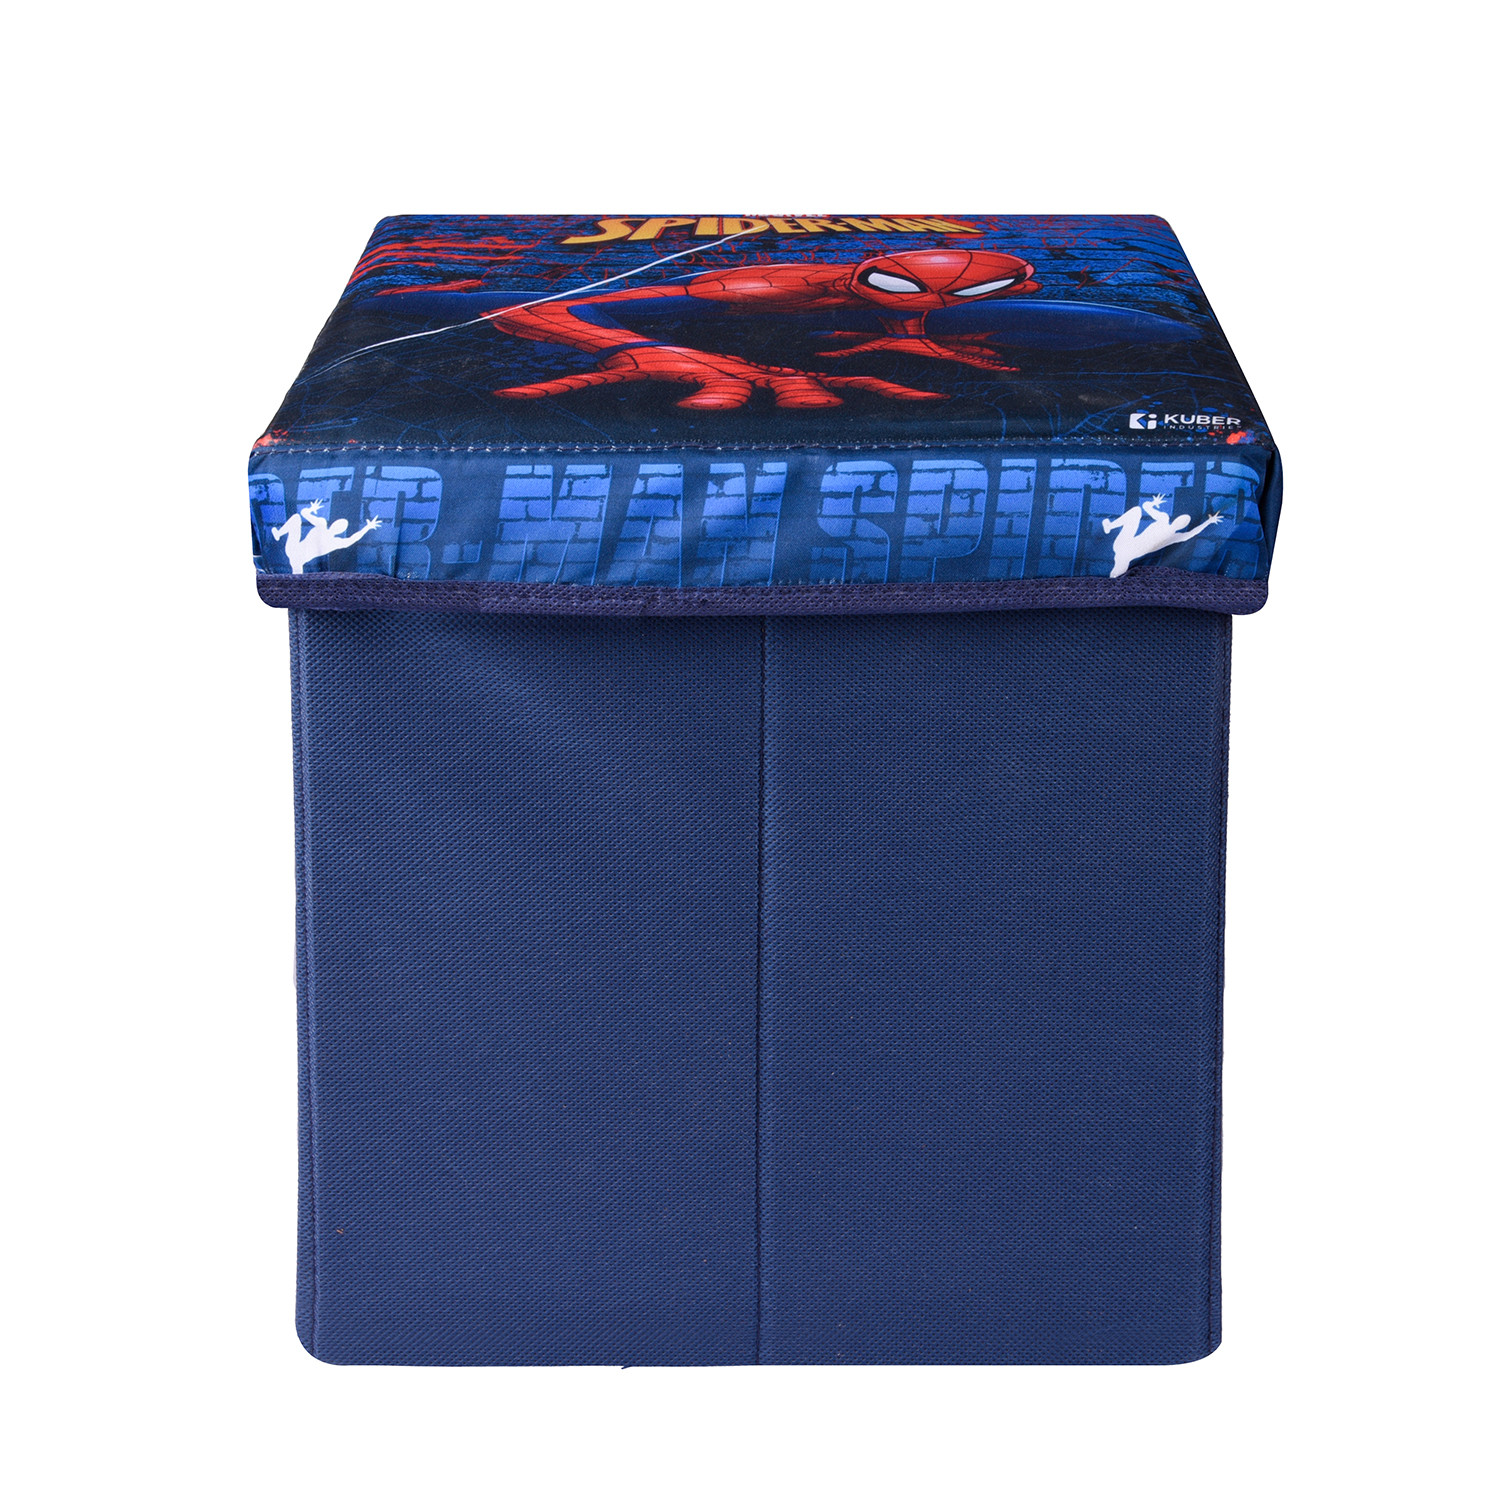 Kuber Industries Marvel Spider-Man Storage Sitting Stool | Foldable Storage Box | Storage Sitting Stool for Kids Room | Stool For Living Room | Storage Stool Box For Toys | Blue